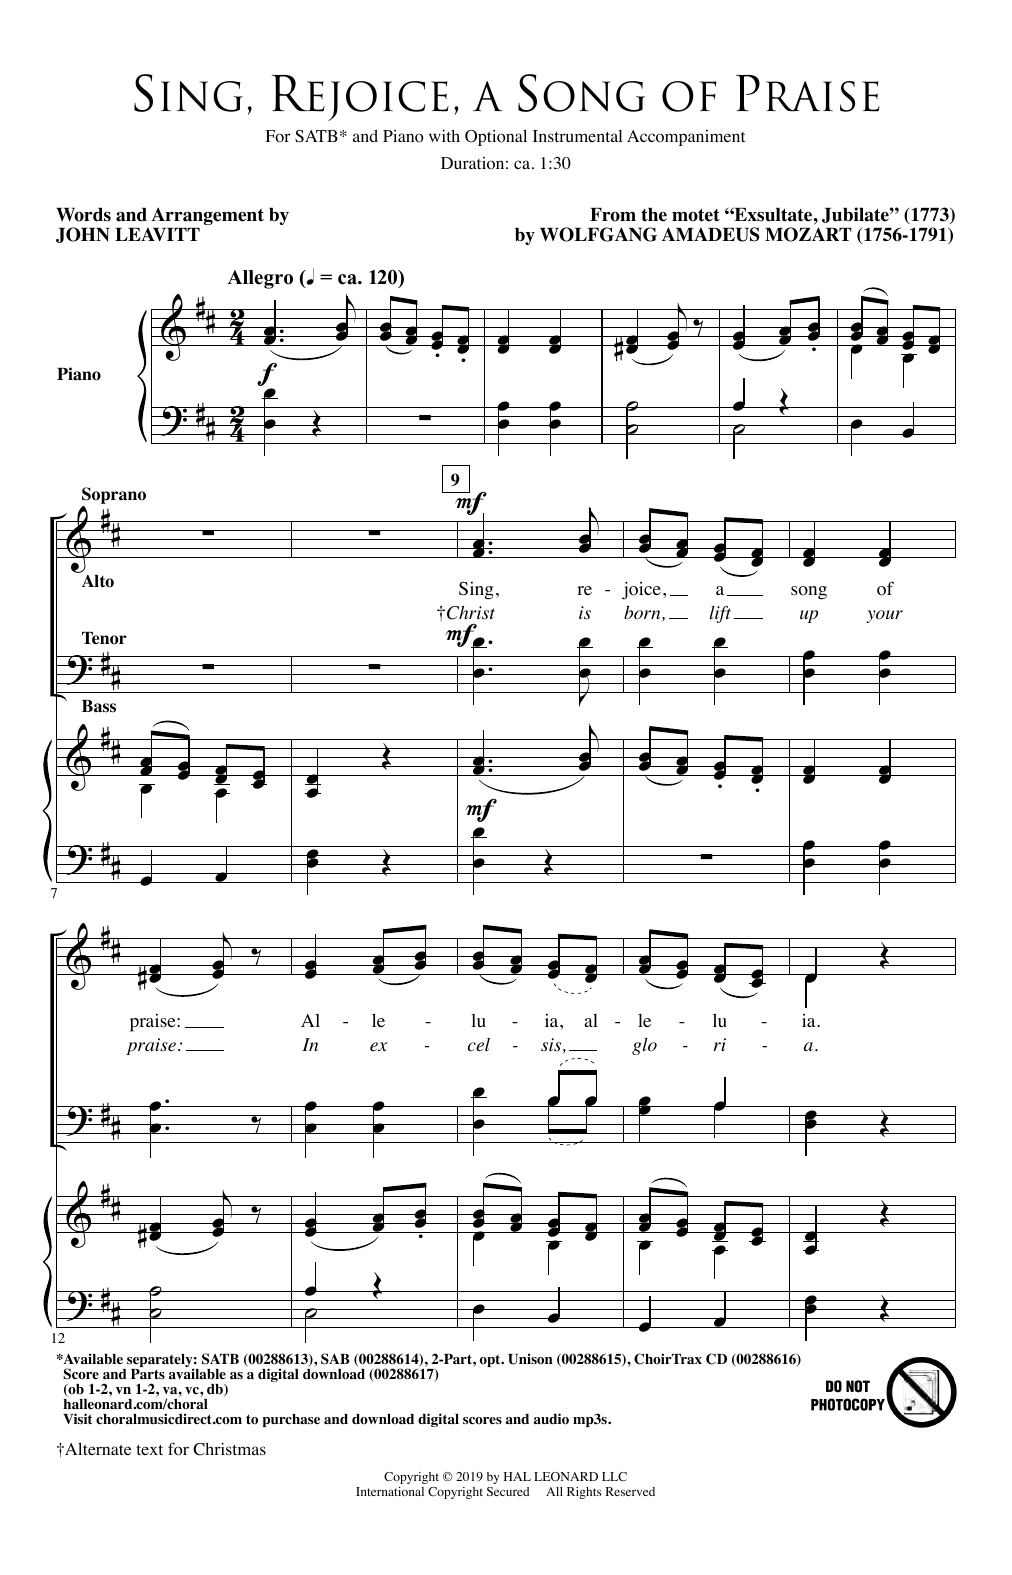 Wolfgang Amadeus Mozart Sing, Rejoice A Song Of Praise (arr. John Leavitt) Sheet Music Notes & Chords for 2-Part Choir - Download or Print PDF